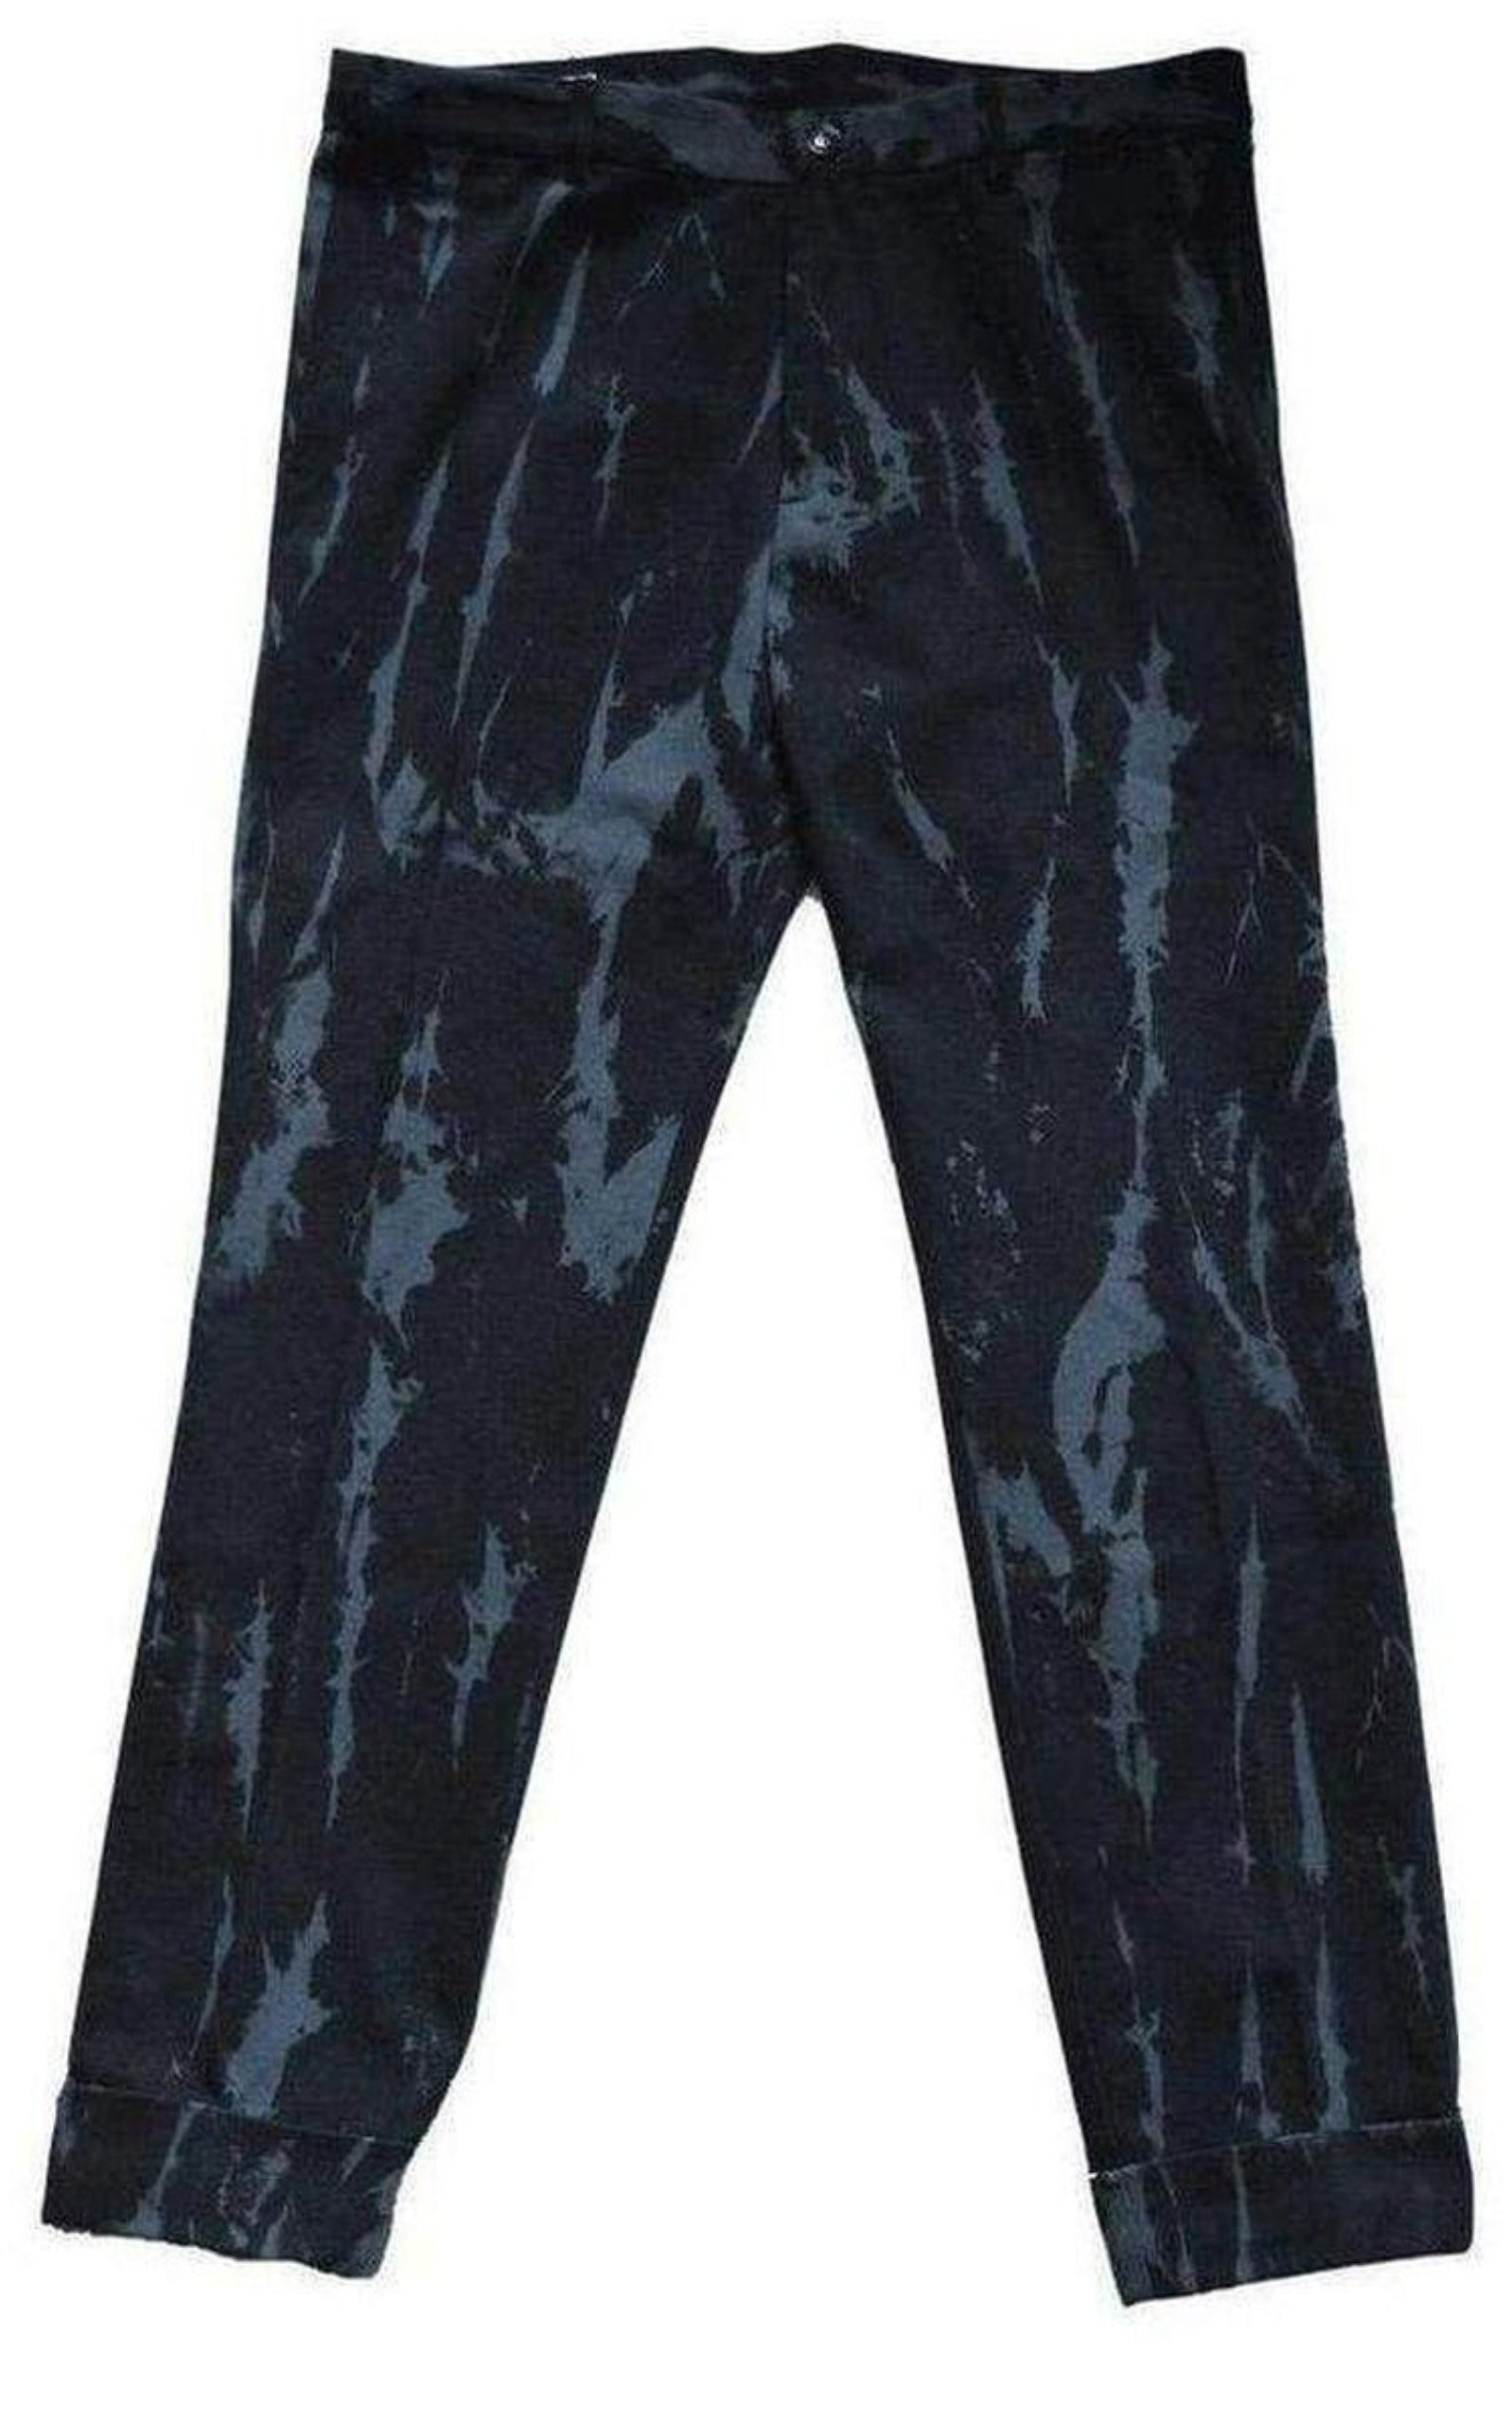 Priddy Jeans Pants - 1